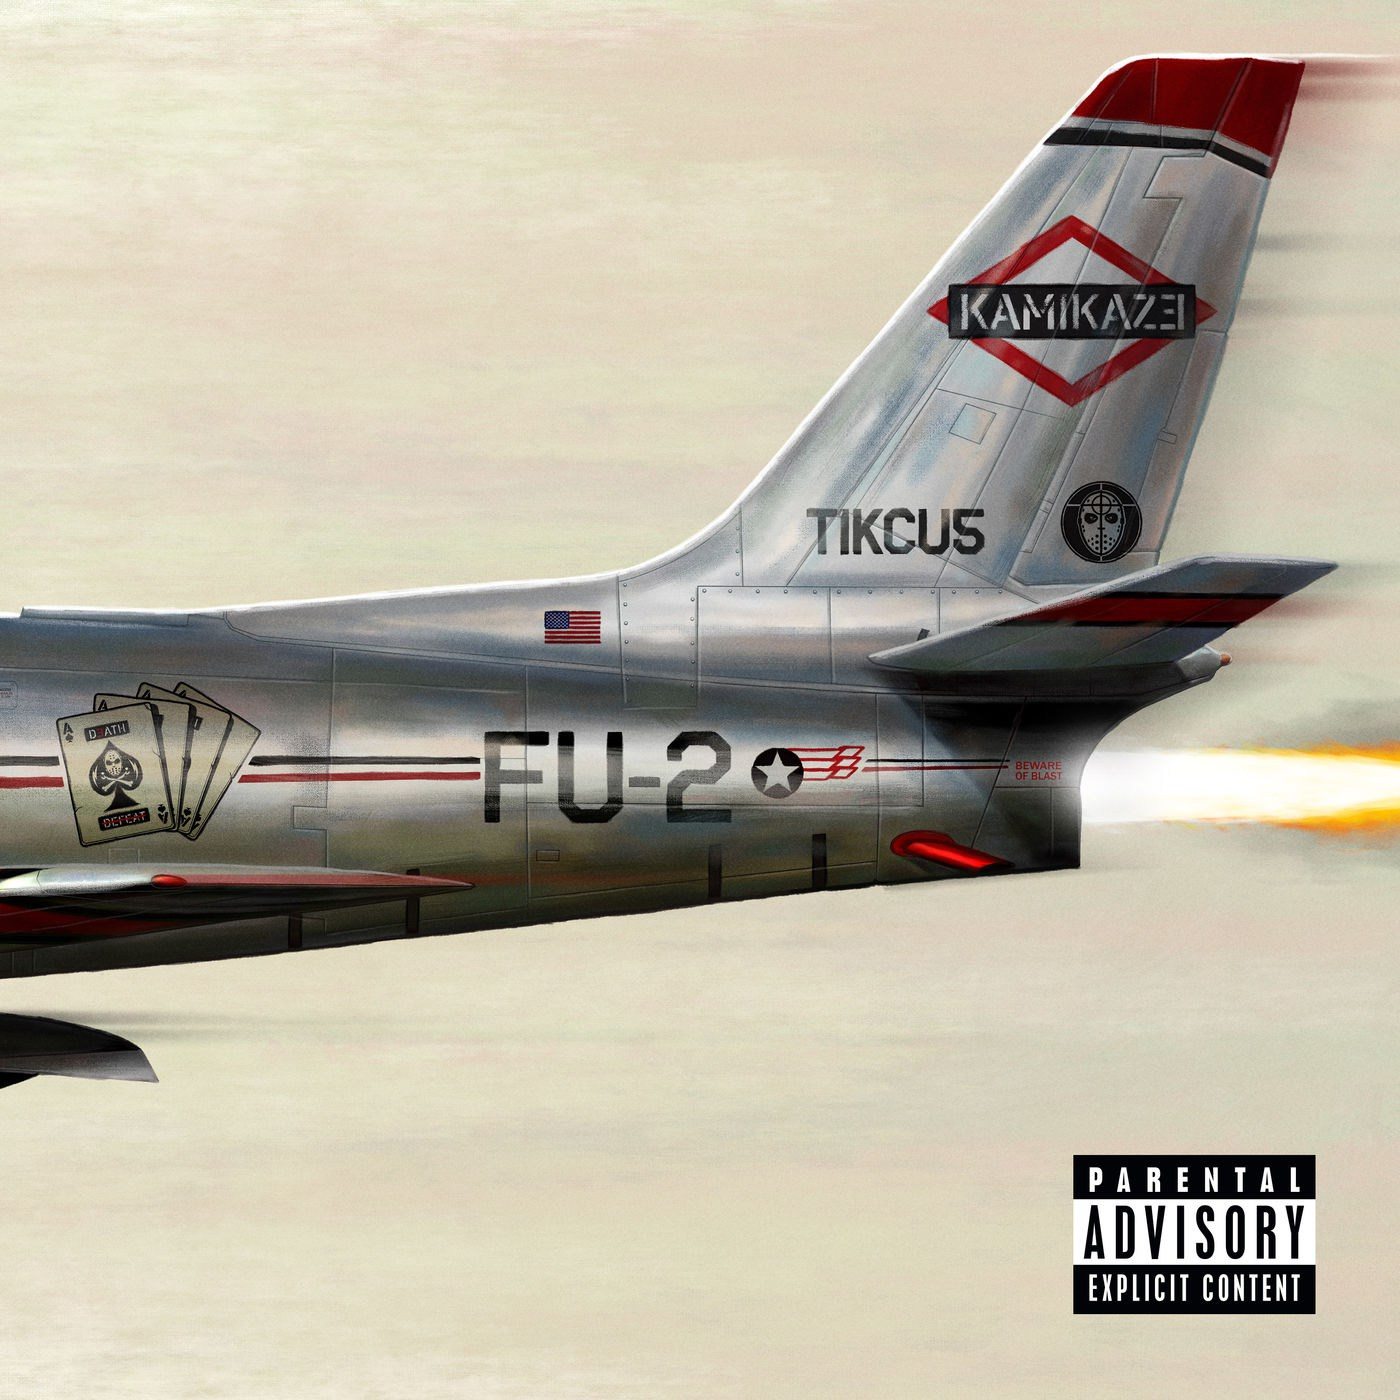  Eminem sample Kendrick Lamar dans son album surprise “Kamikaze”